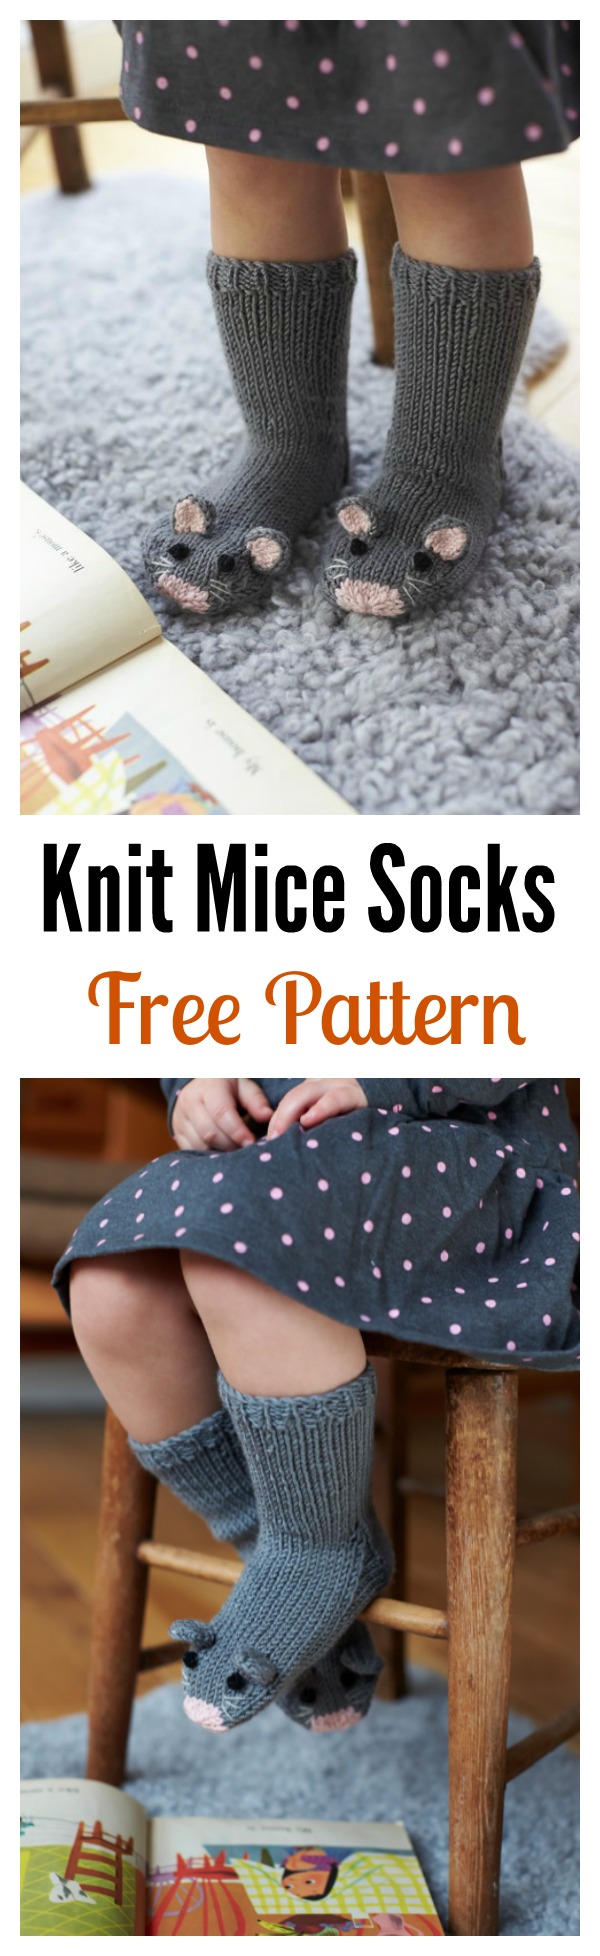 Knit Mice Socks Free Pattern